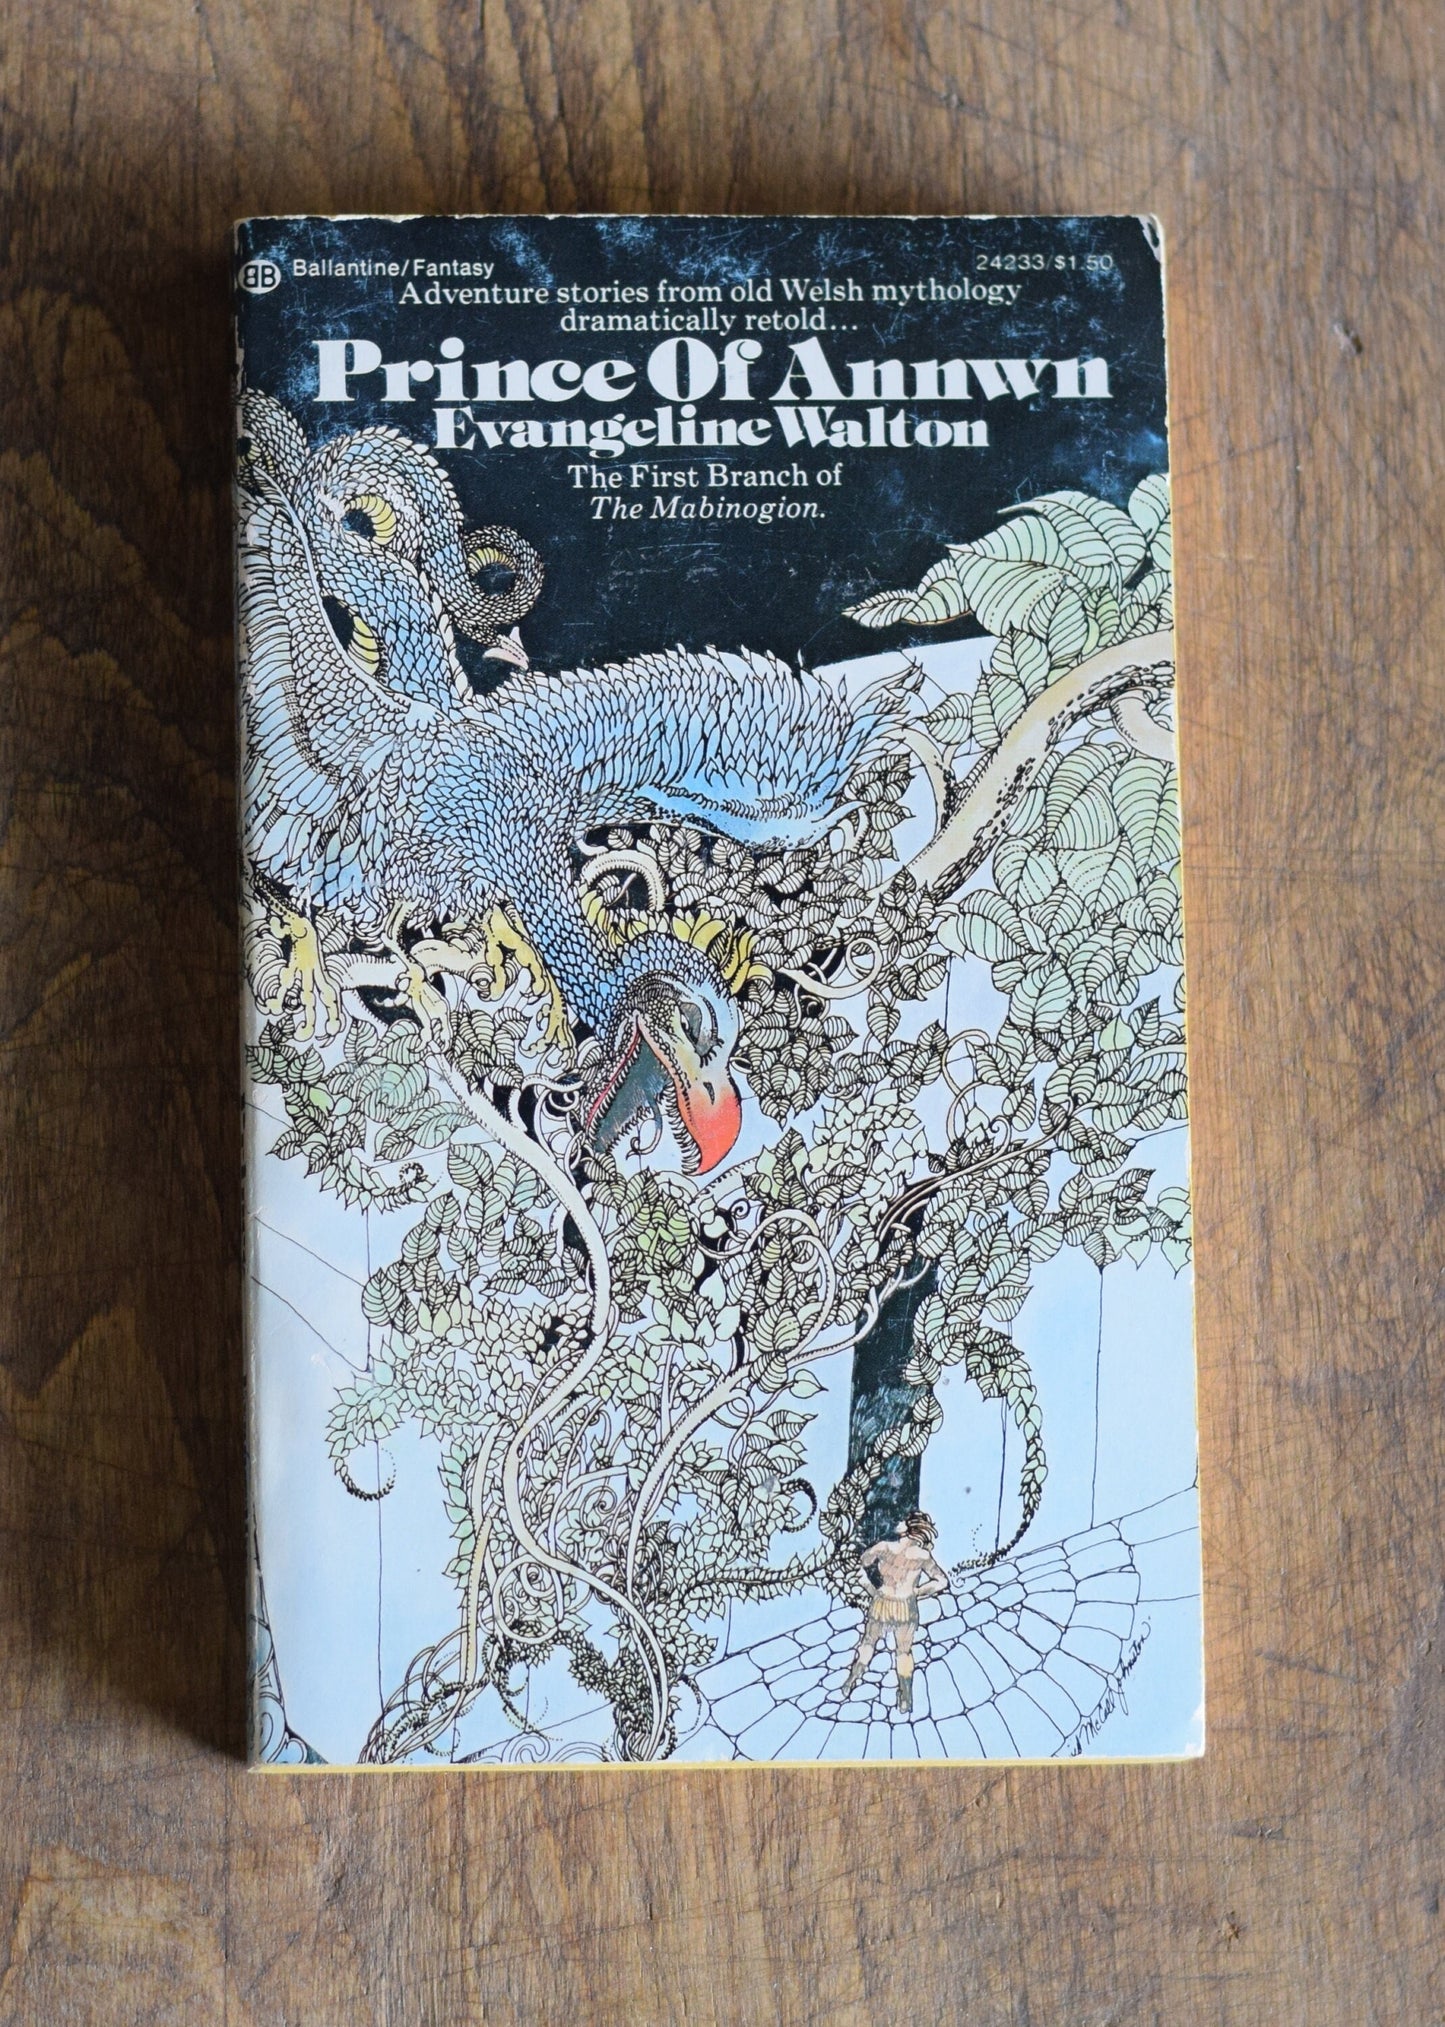 Vintage Fantasy Paperback Novel: Evangeline Walton - Prince of Annwn FIRST PRINTING